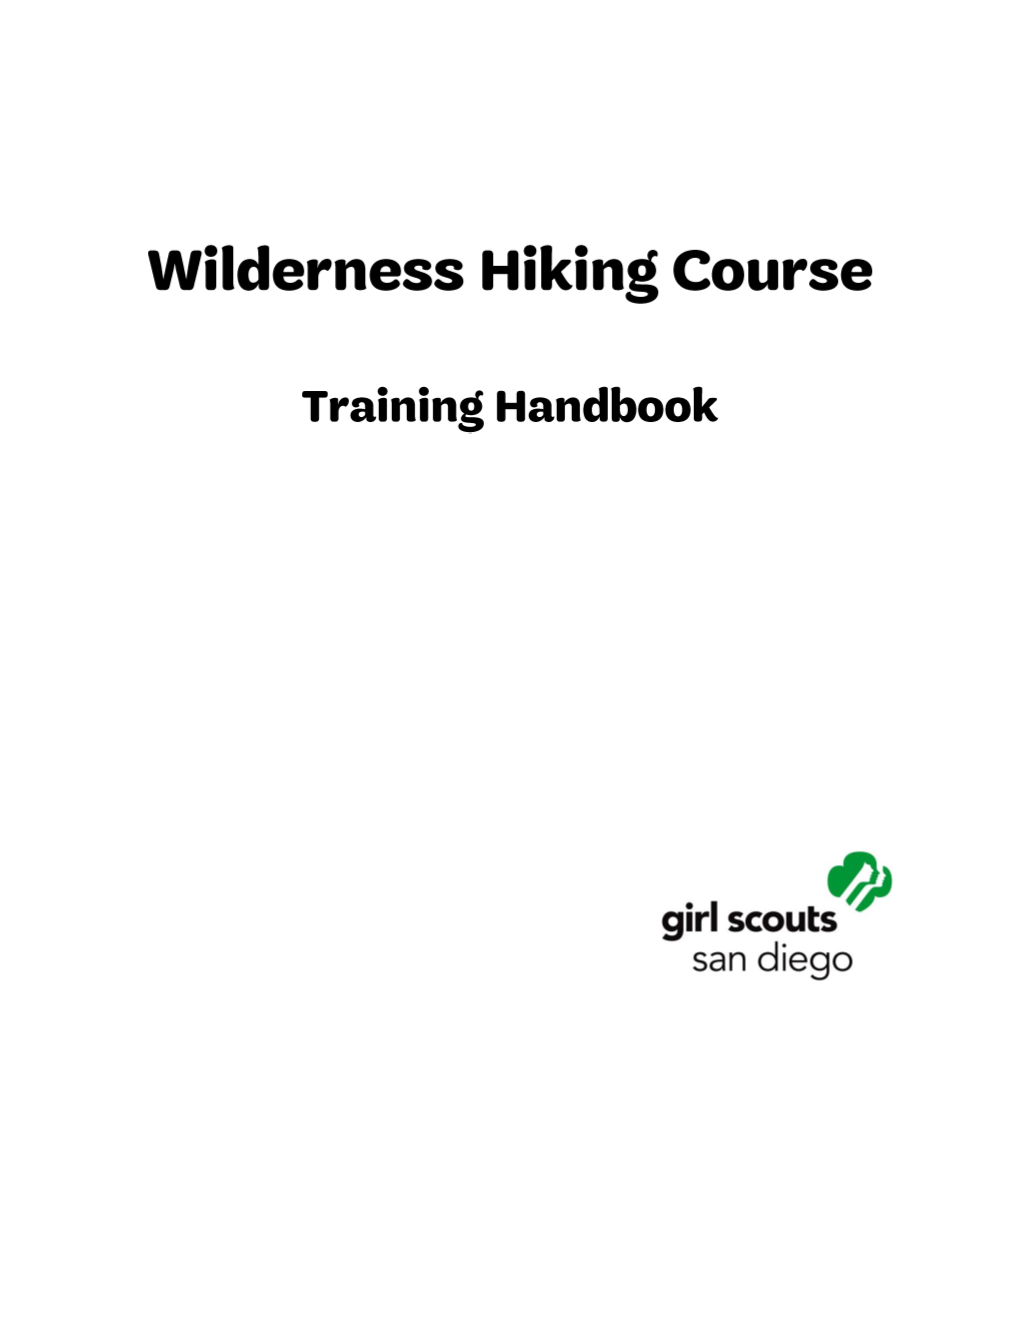 Wilderness Hiking Course Training Handbook